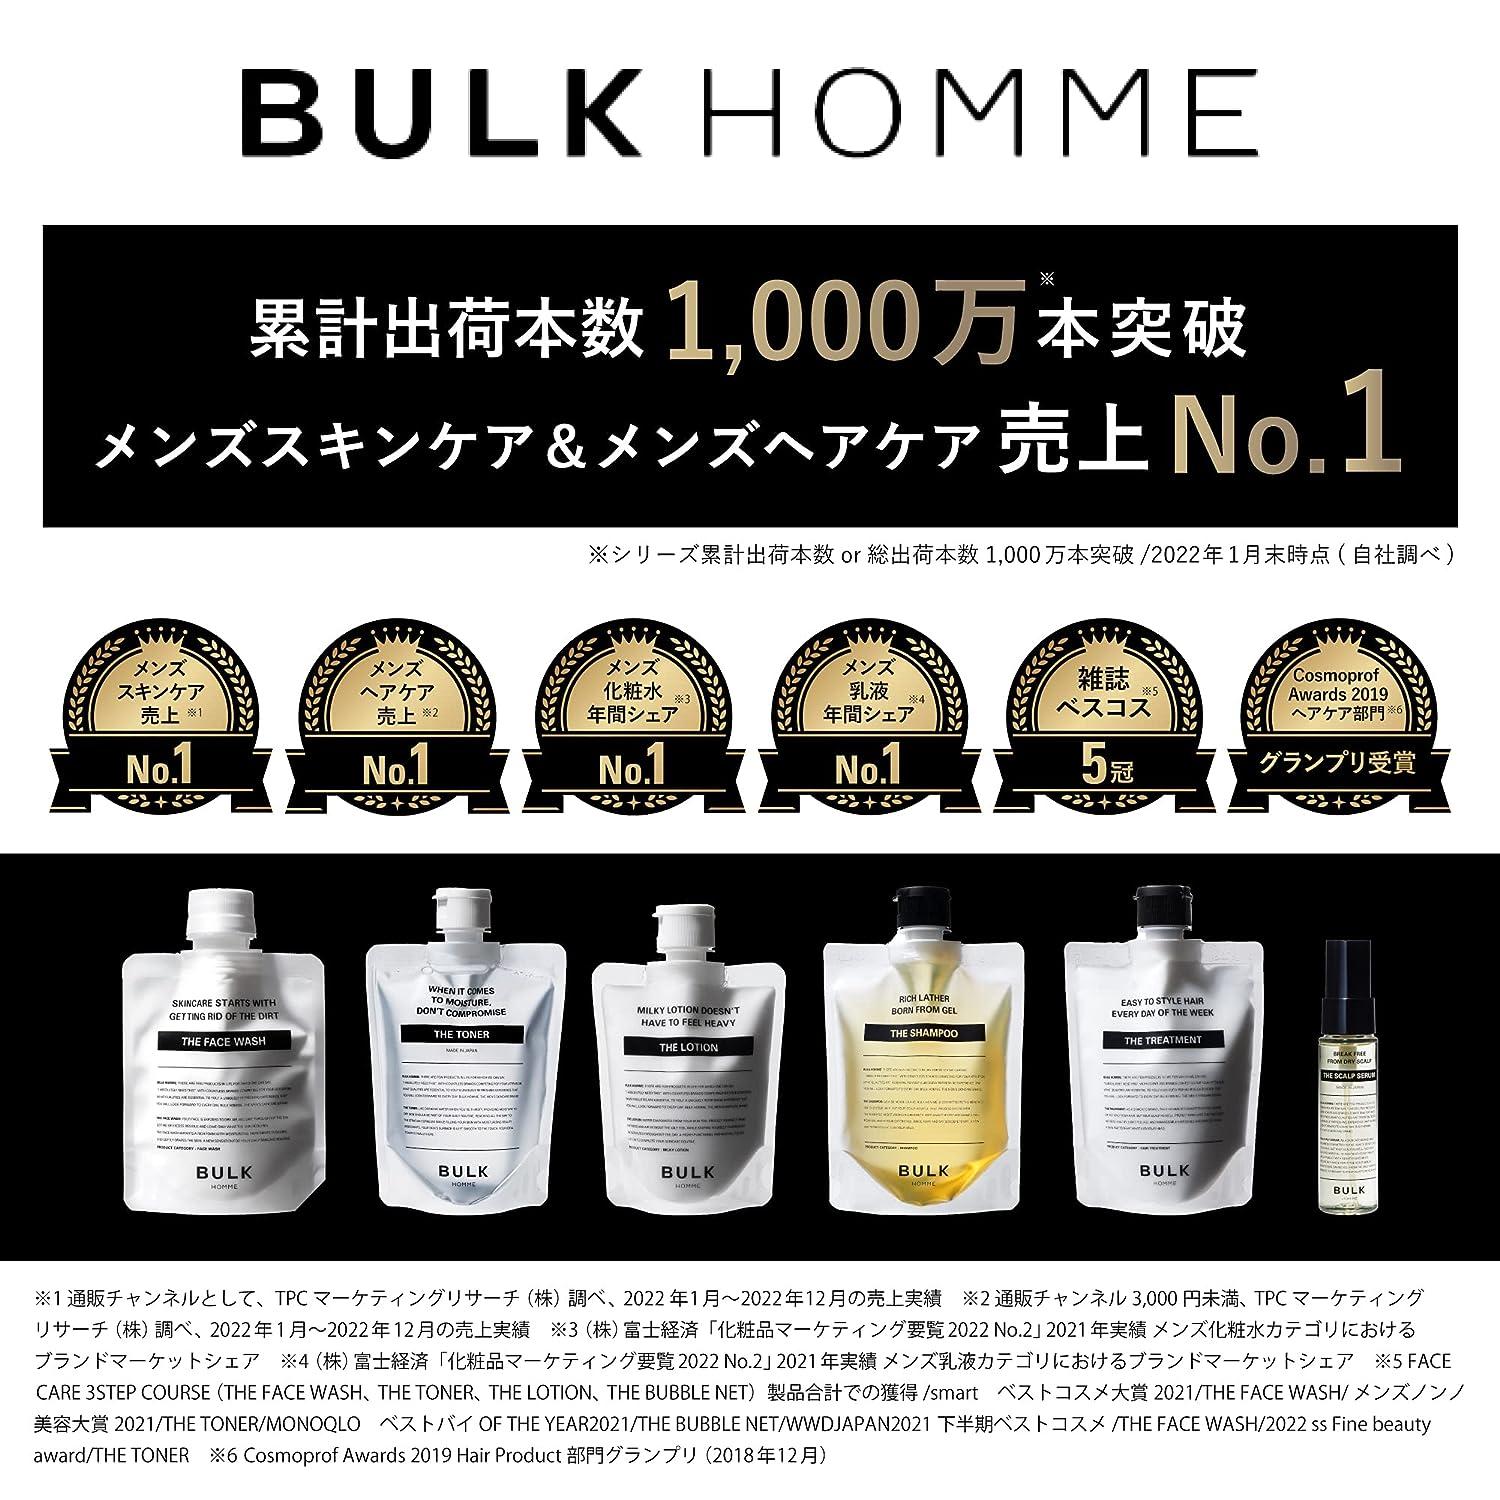 BULK HOMME - THE FACE WASH 3.5 oz | Foaming Men s Face Wash